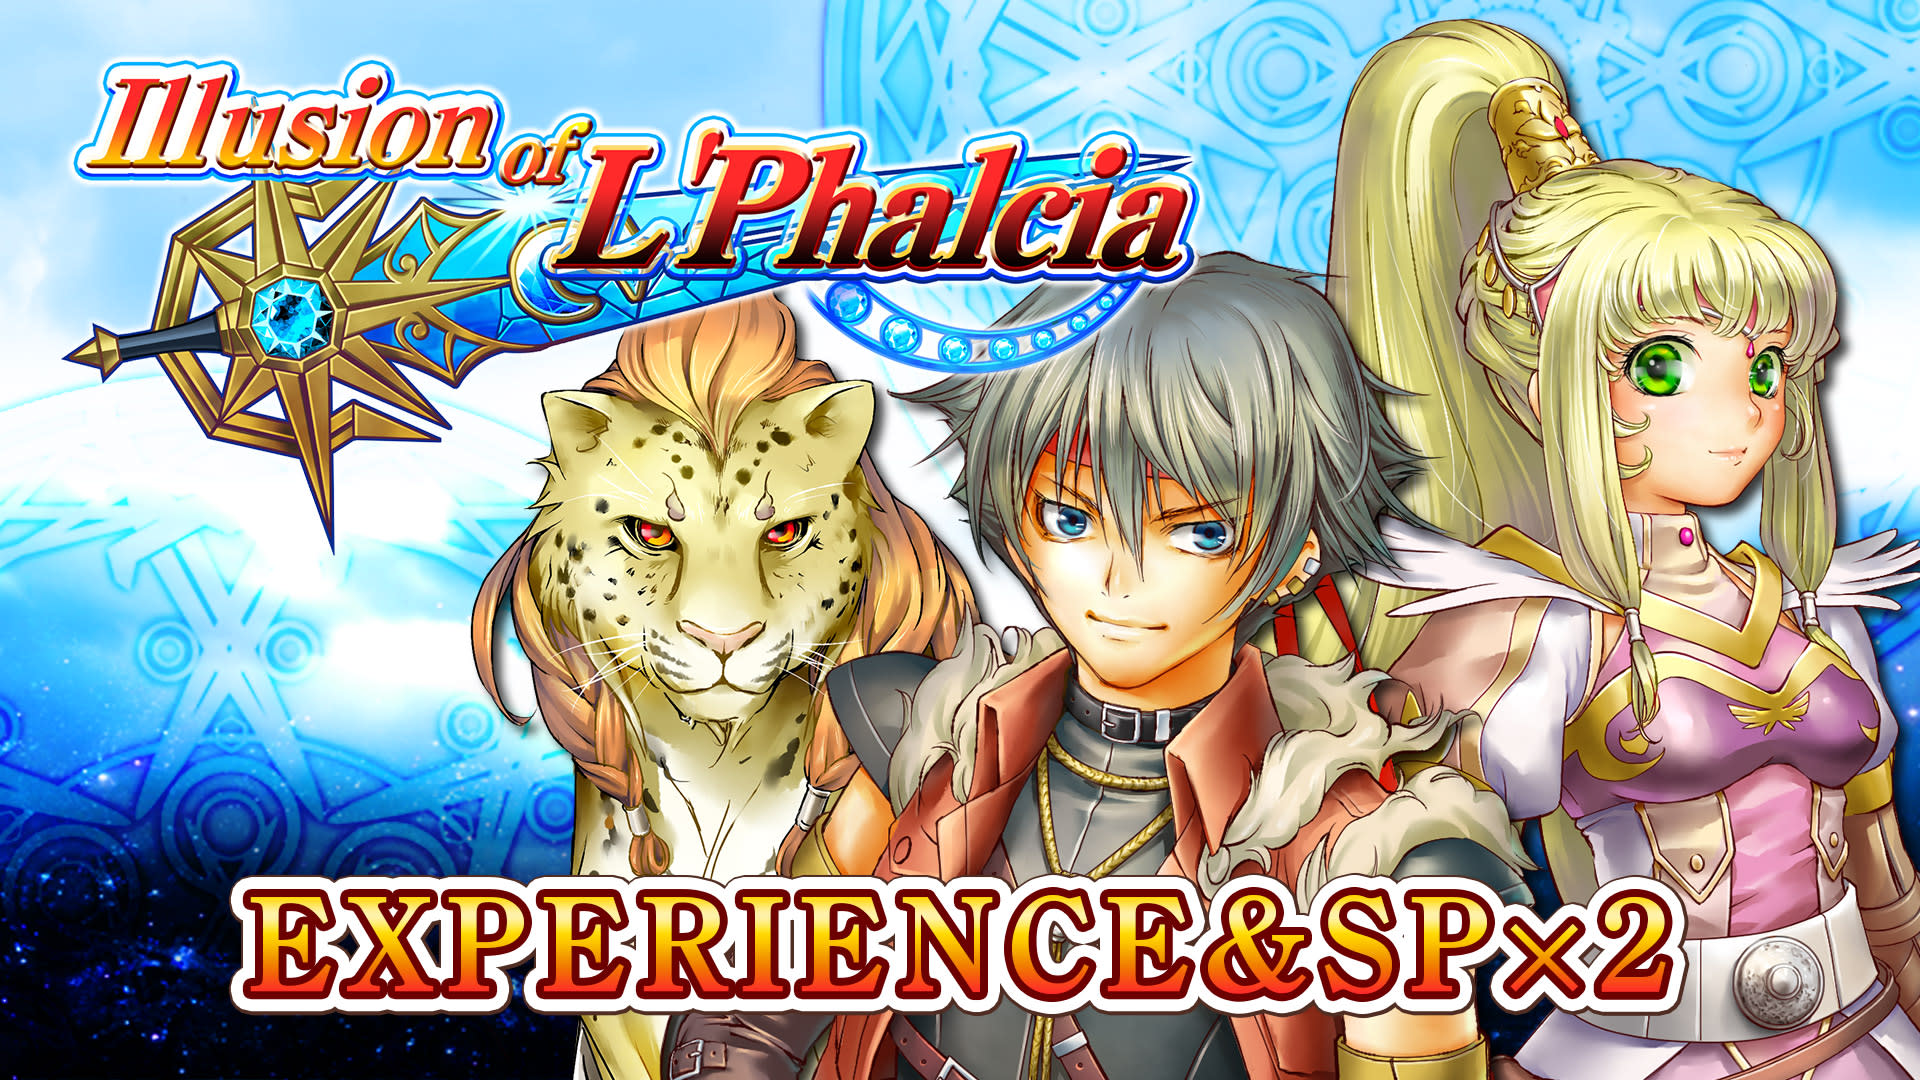 Experience & SP x2 - Illusion of L'Phalcia